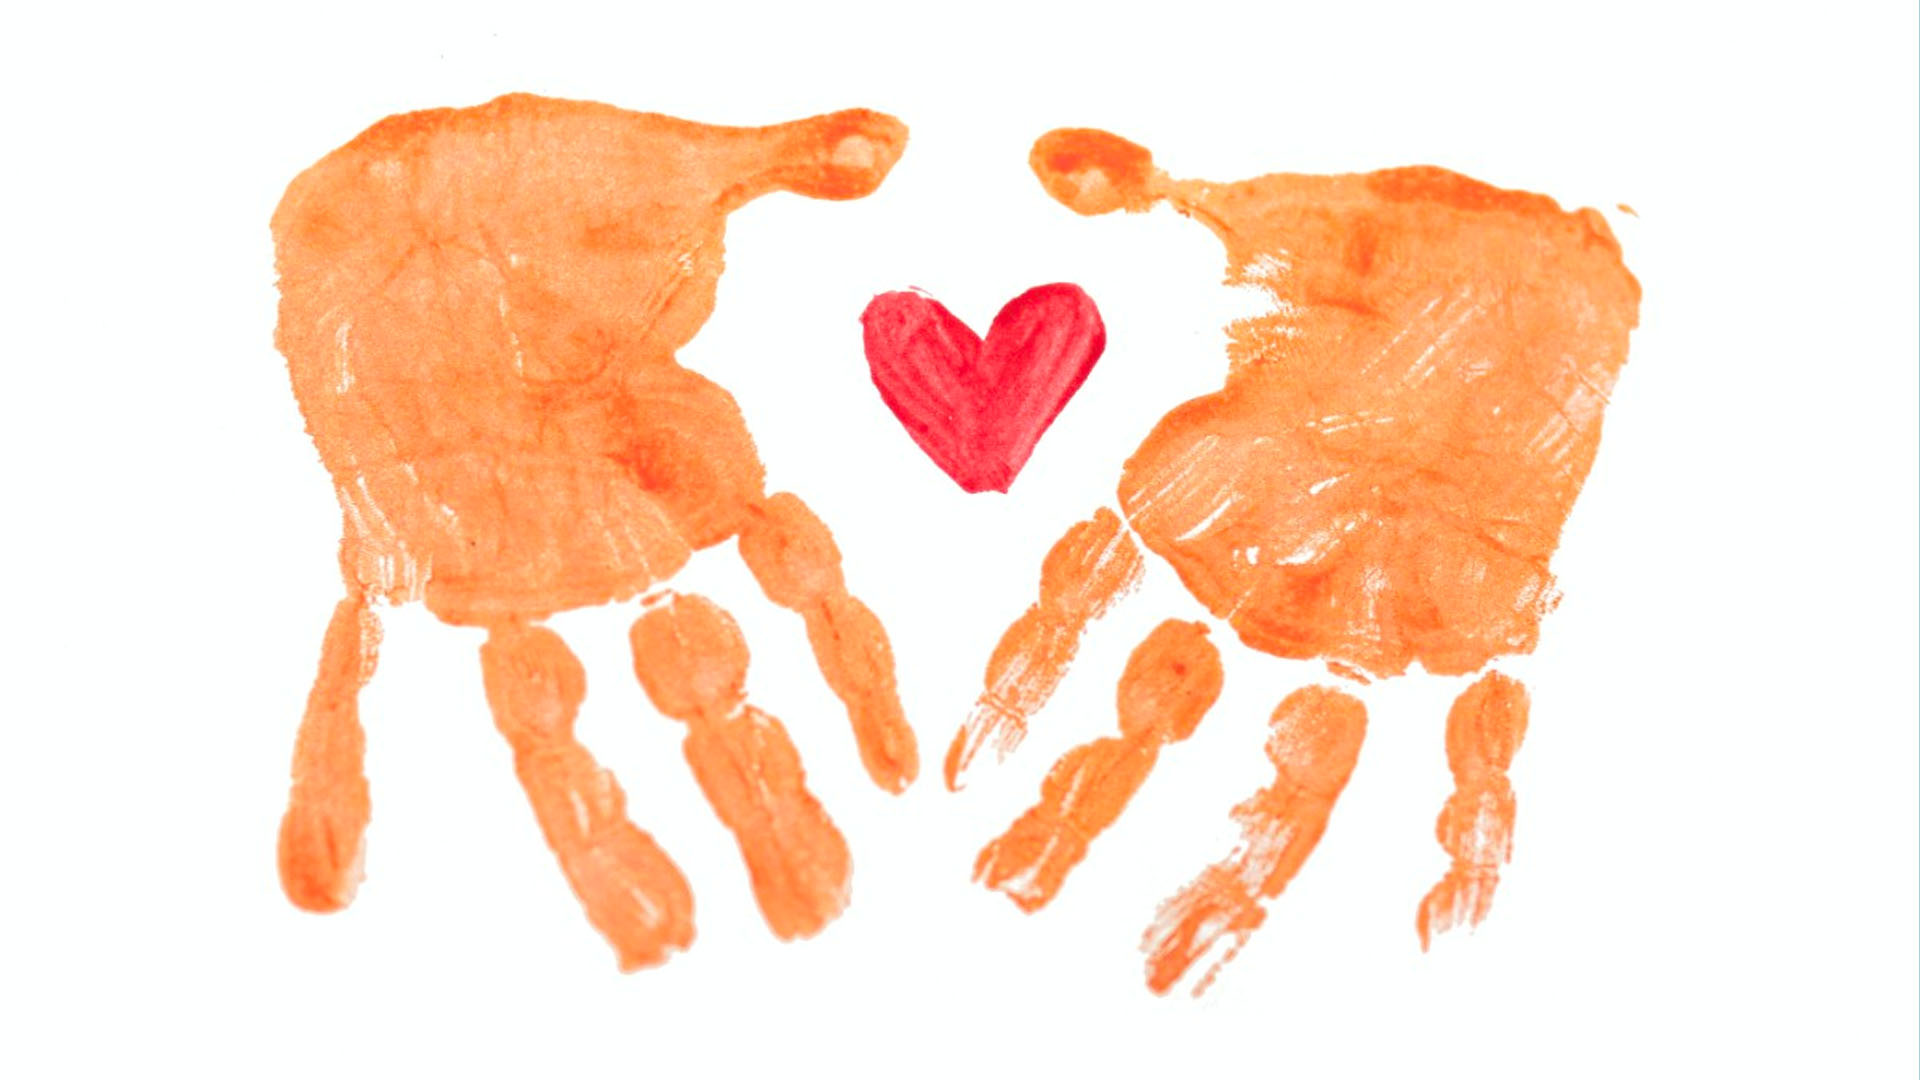 painted handprints surrounding a heart